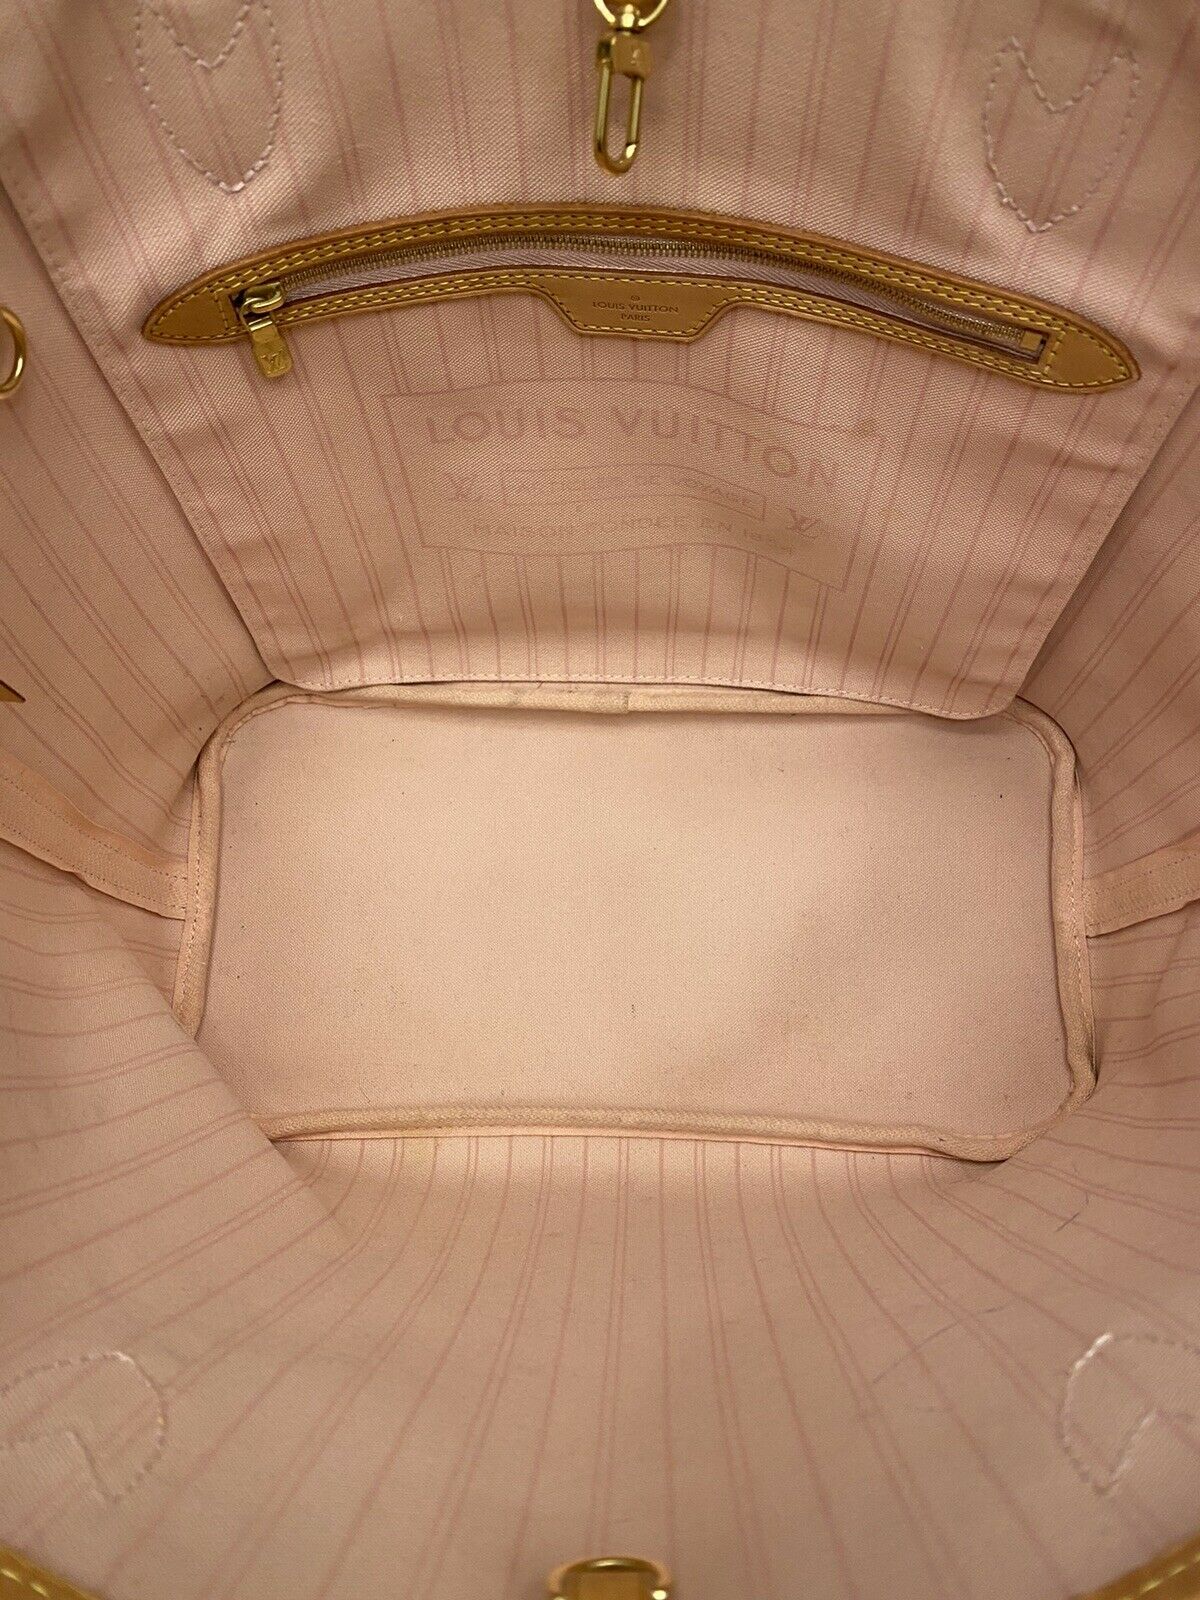 Louis Vuitton Damier Rivera MM N41434 - Allu USA